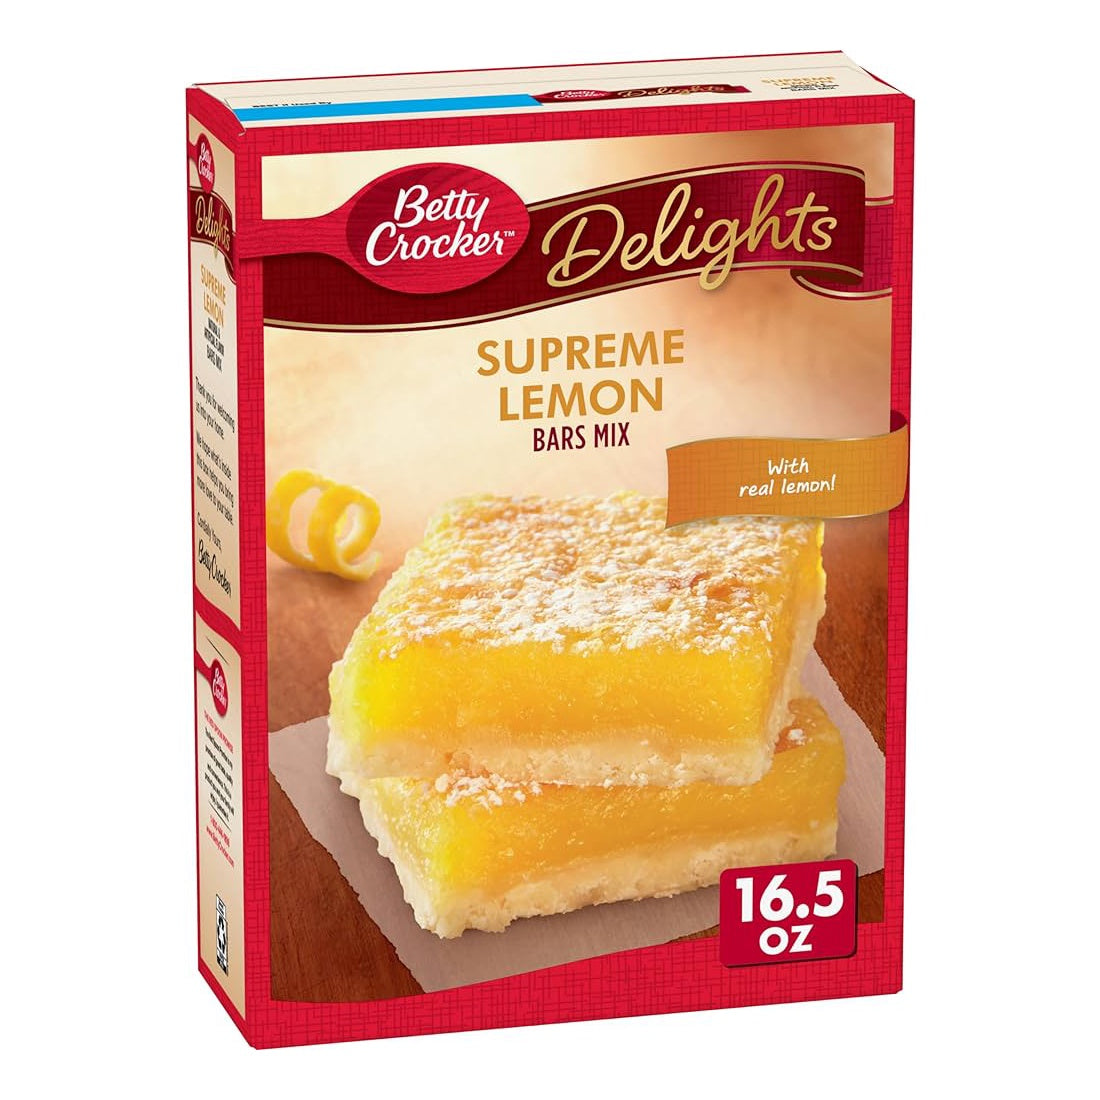 Betty Crocker Delights Supreme Lemon bars mix 16.5oz